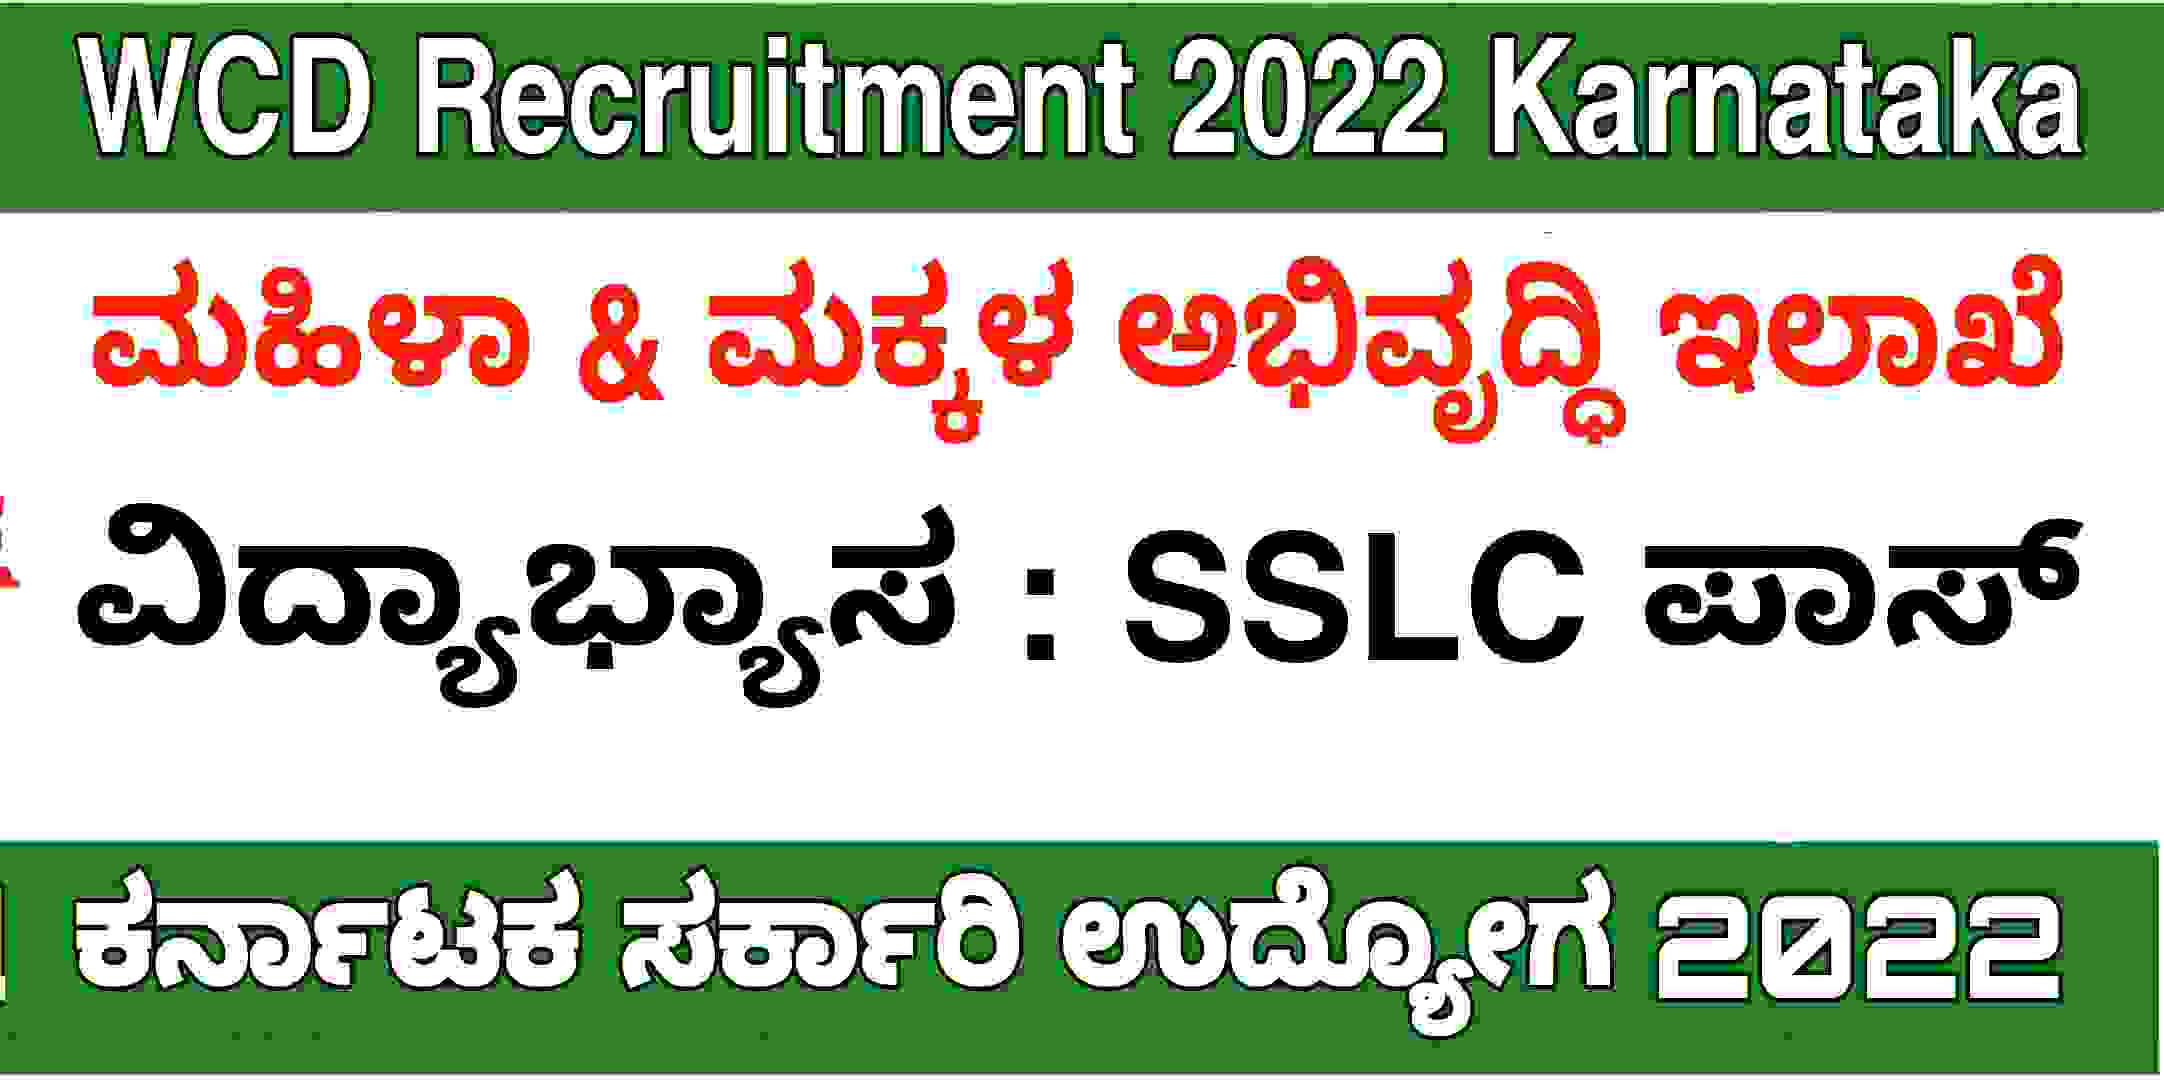 WCD Recruitment 2022 Karnataka